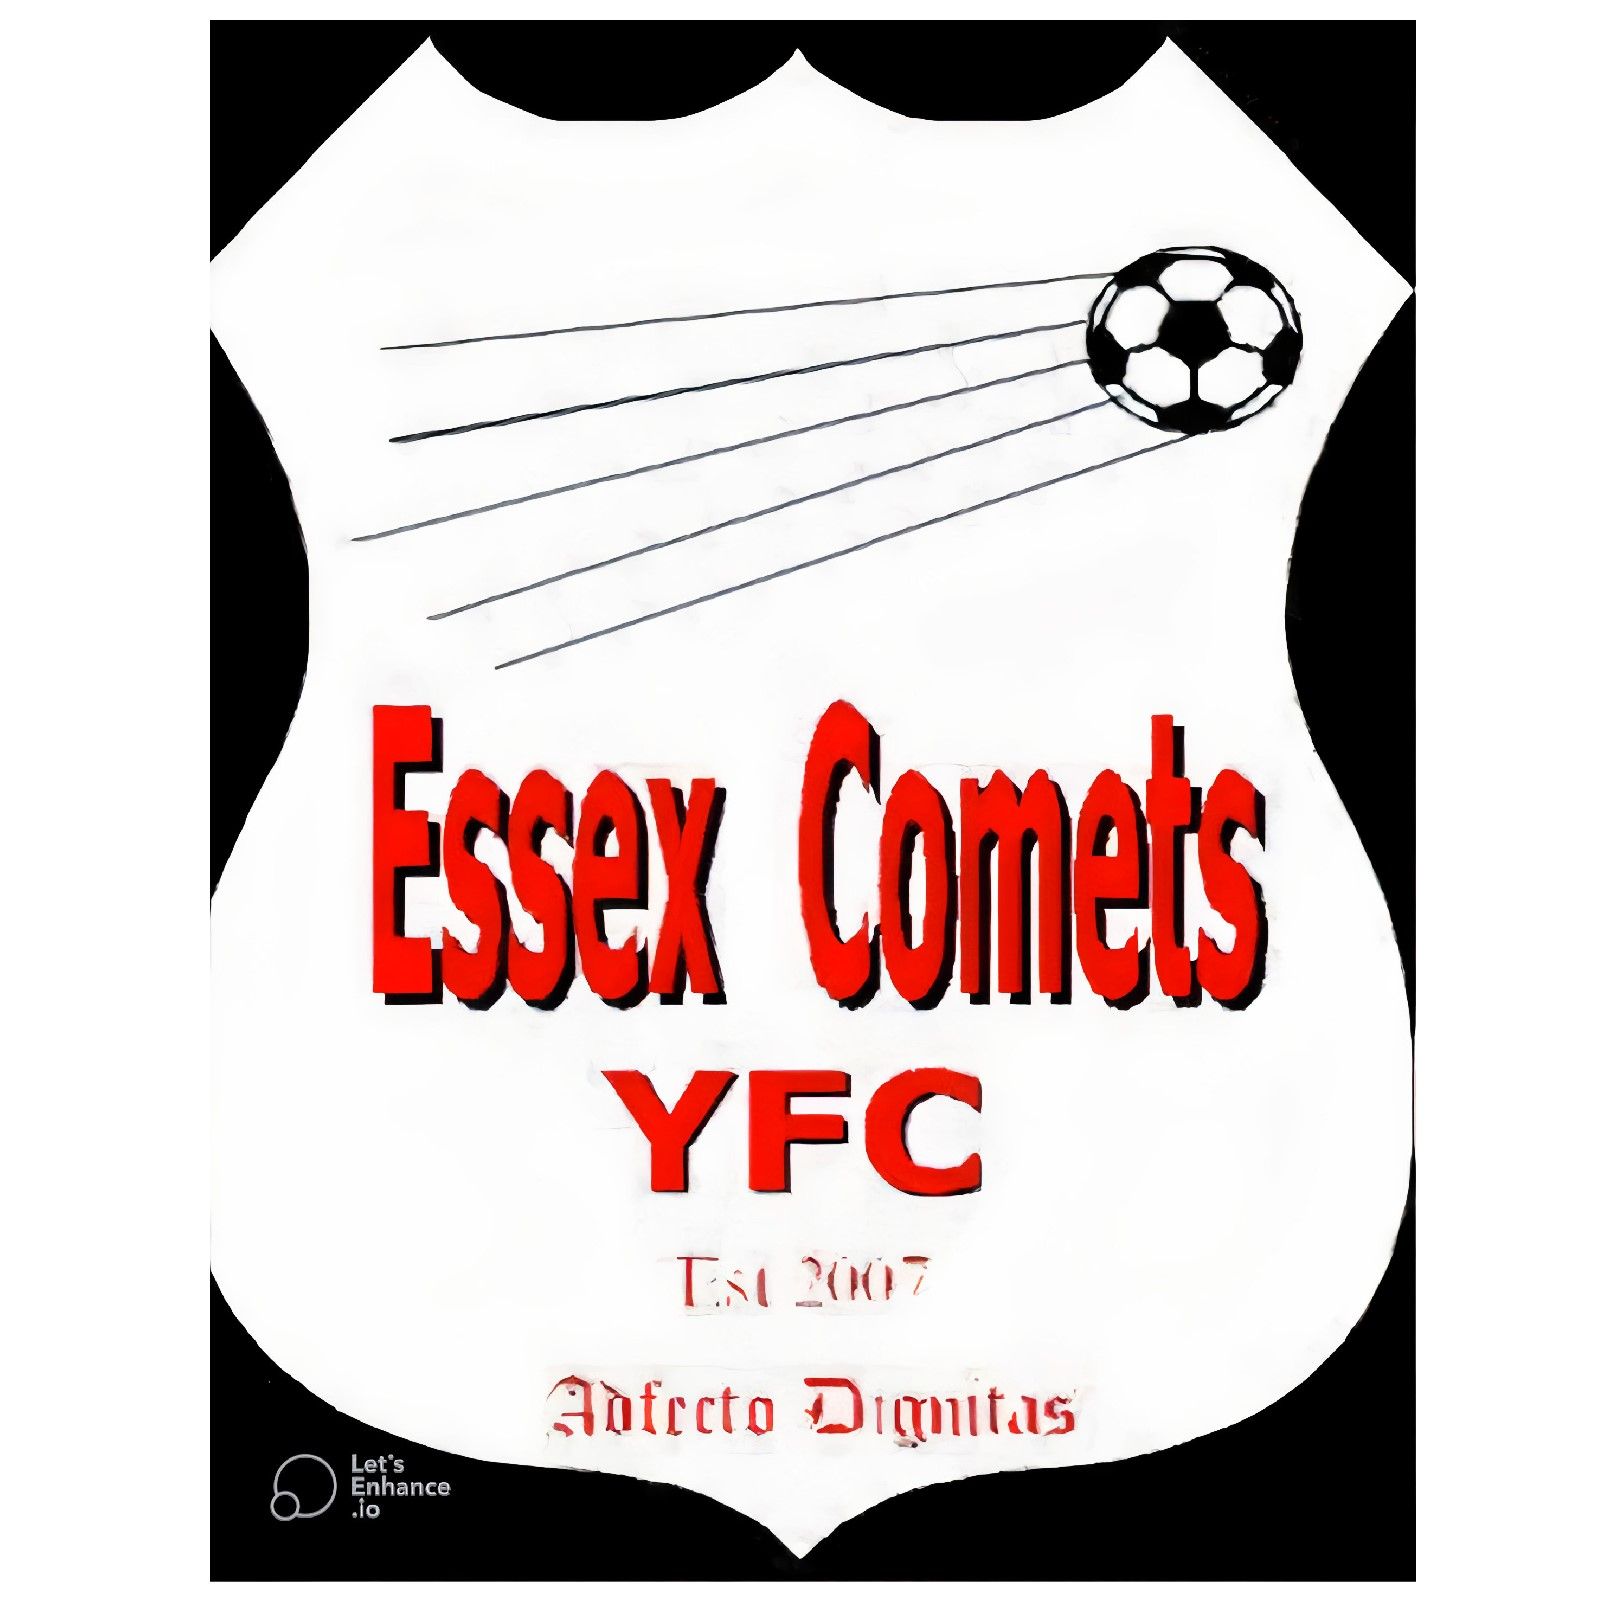 Essex Comets YFC square logo